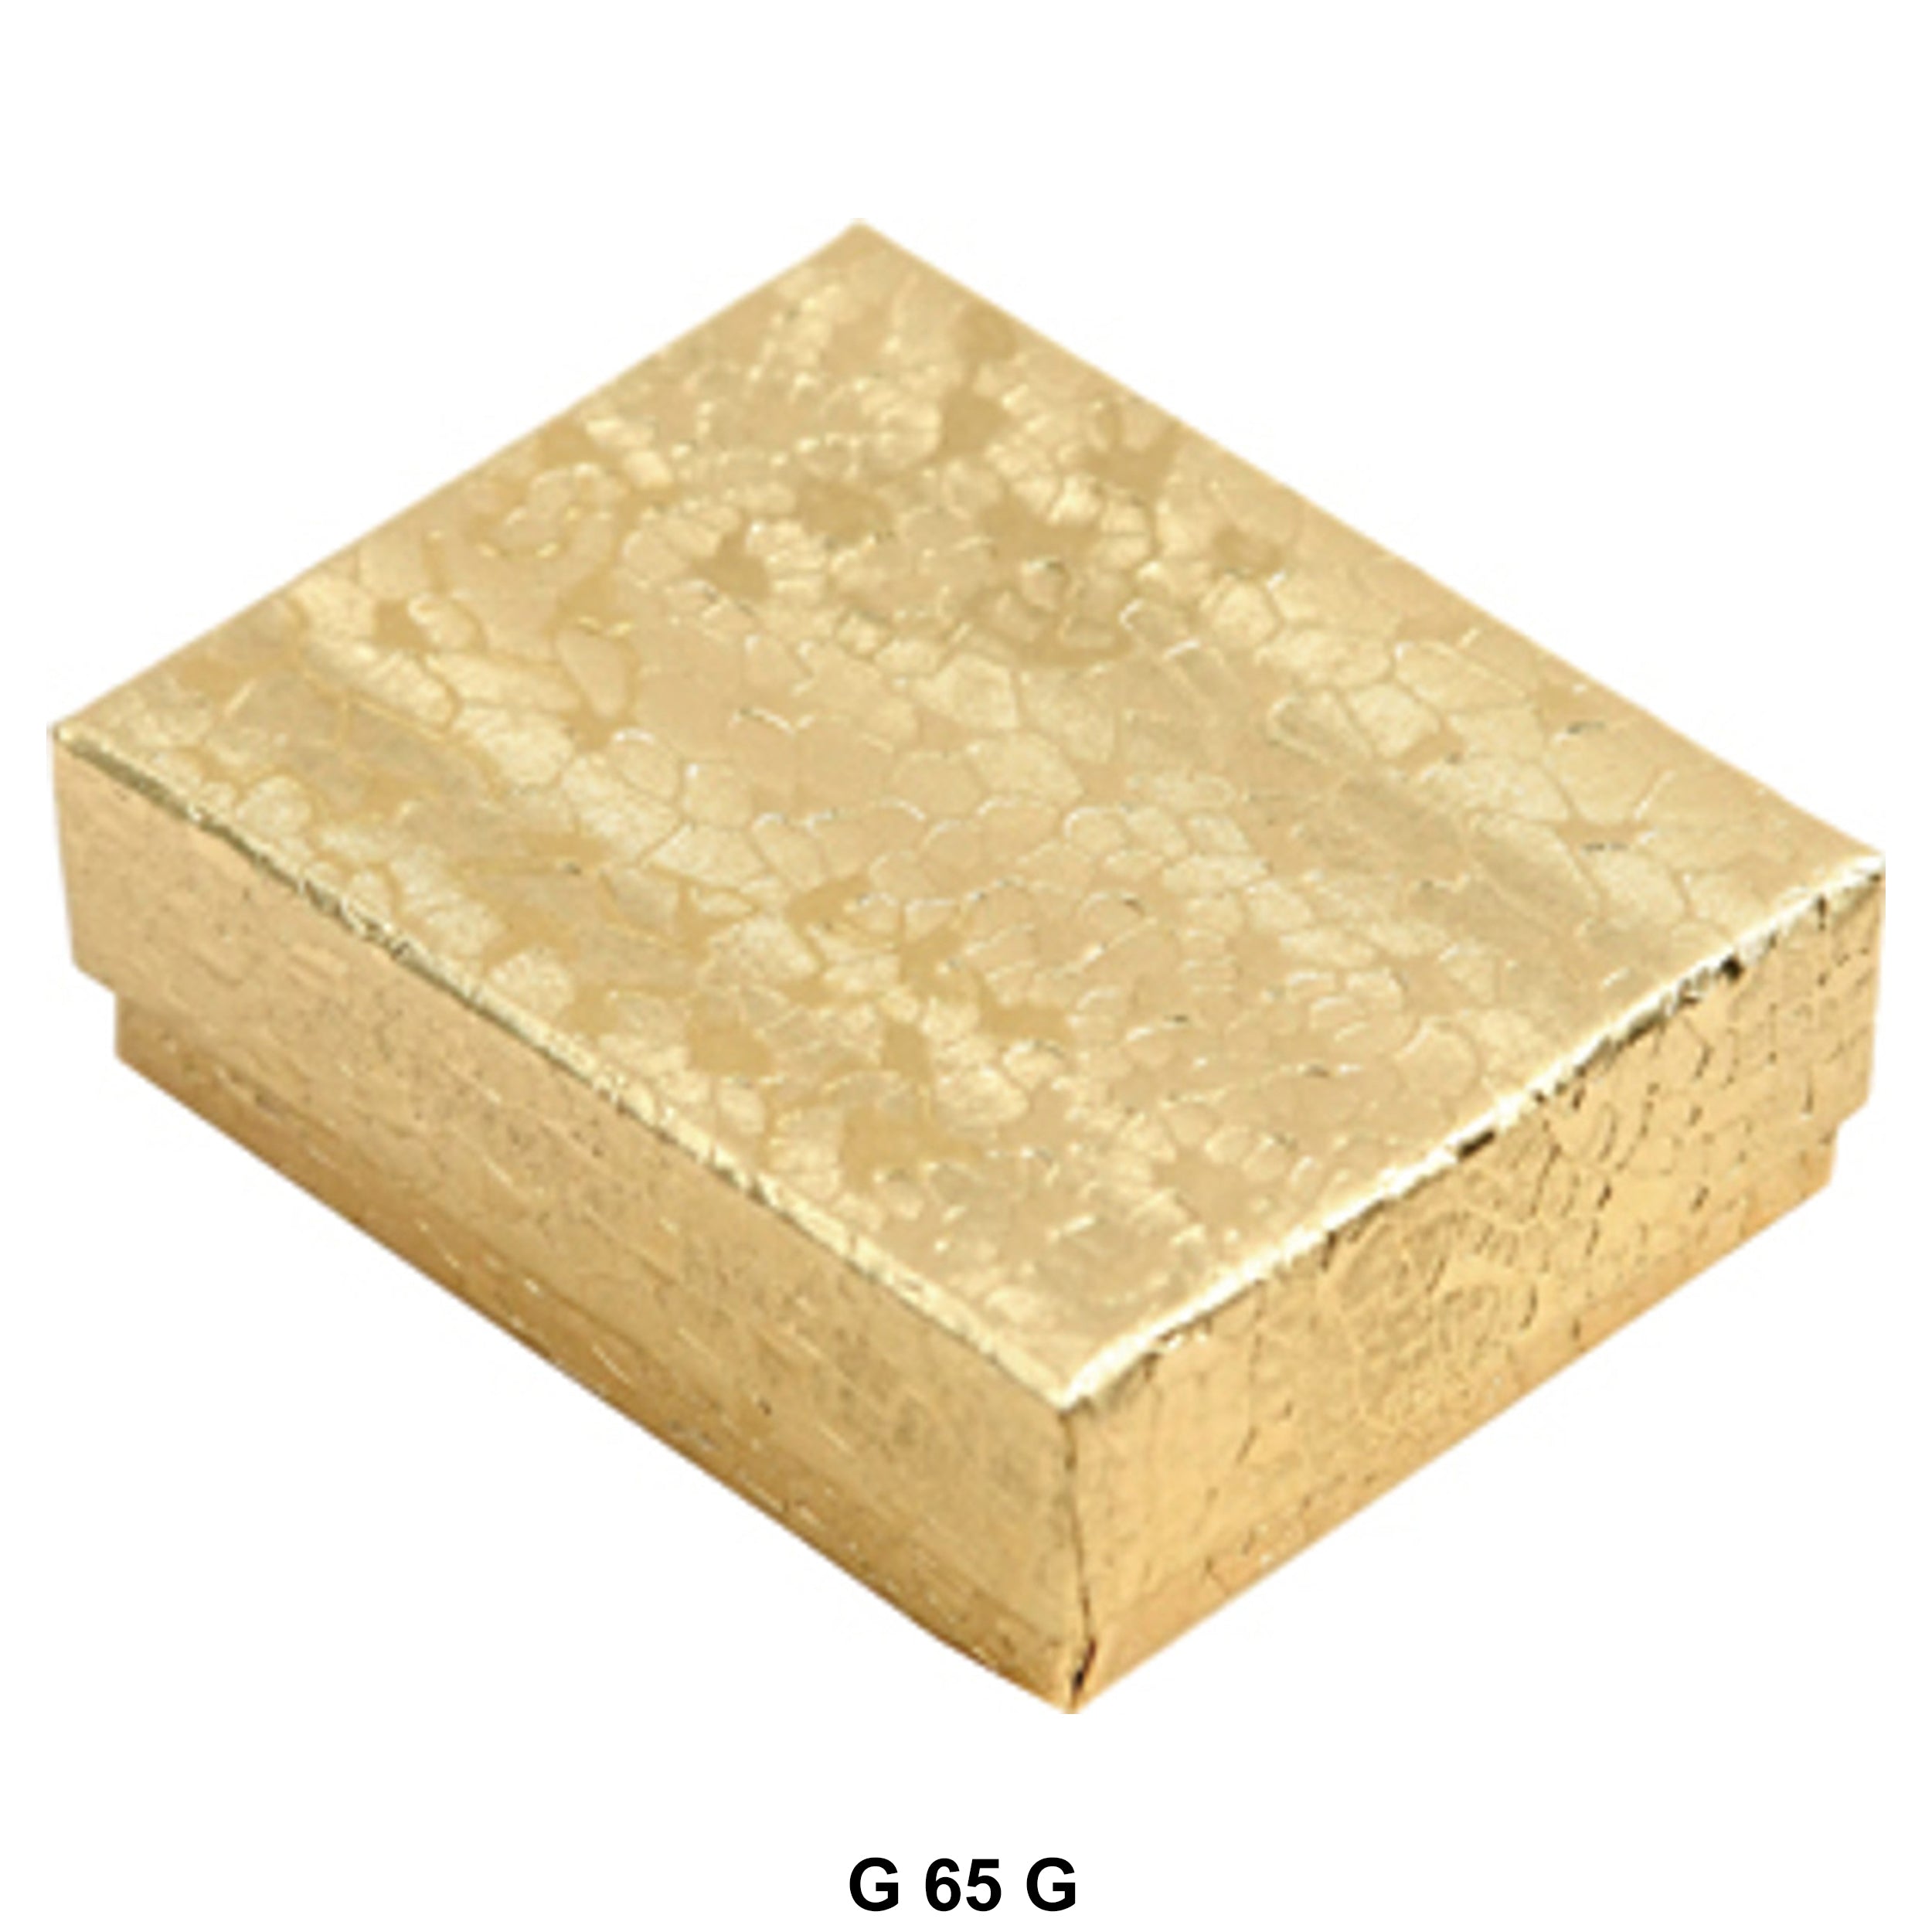 Cotton Filled Box G 65 G (12 Pcs)